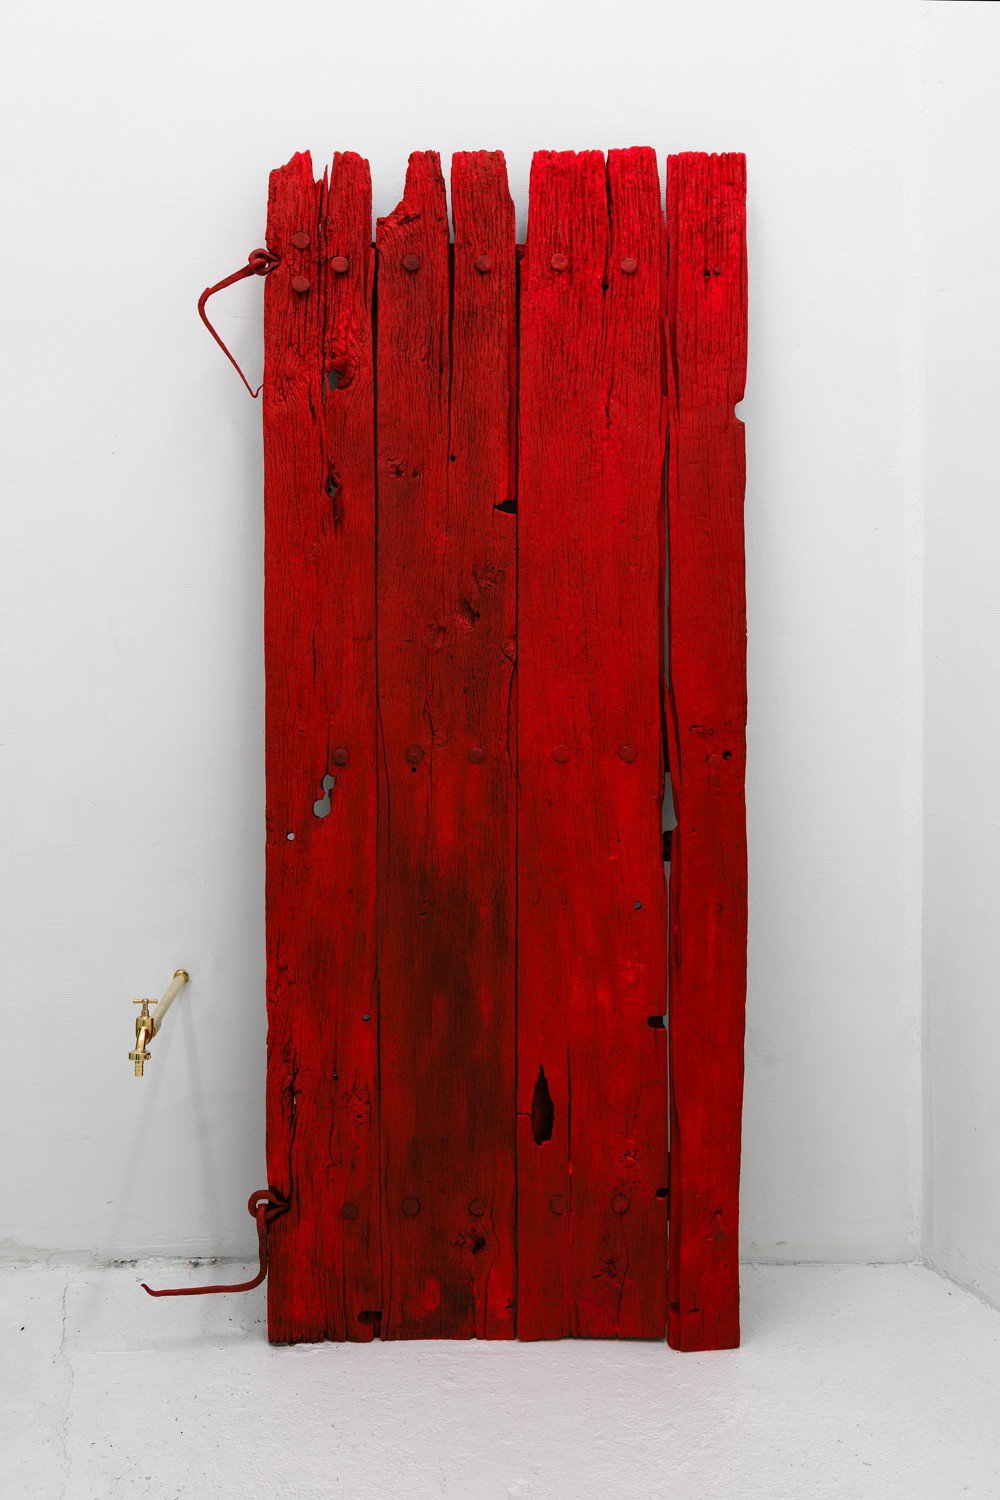 Plamen DejanoffAd (Foundation), 2013Wood and iron220 x 100 x 15 cm